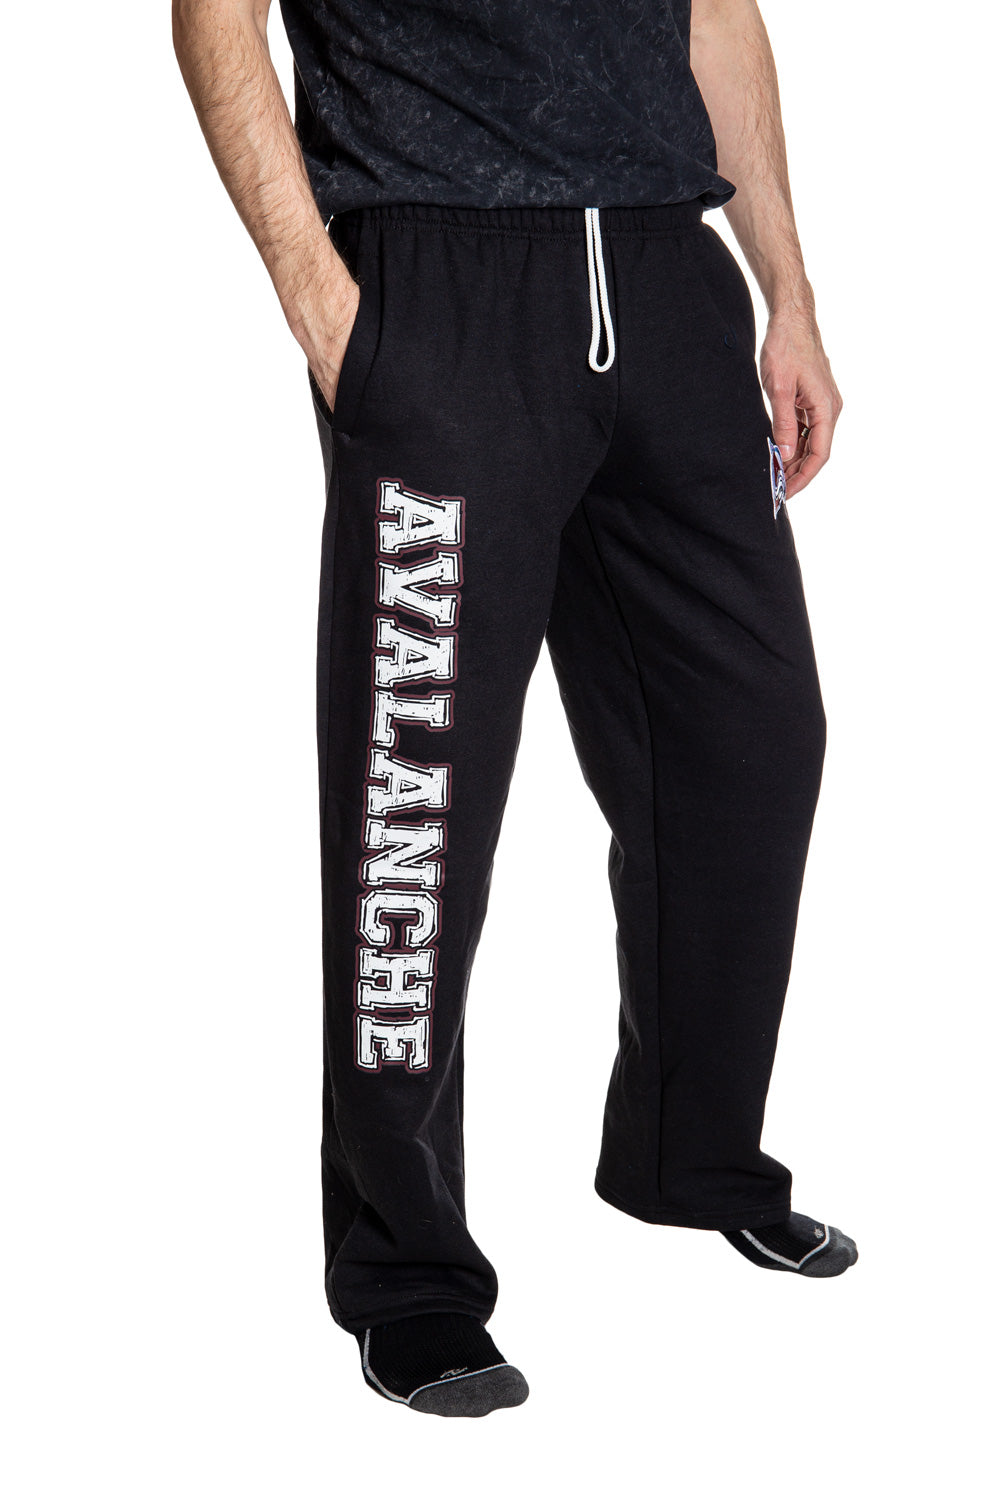 Colorado Avalanche Premium Fleece Sweatpants for Men – Calhoun Store